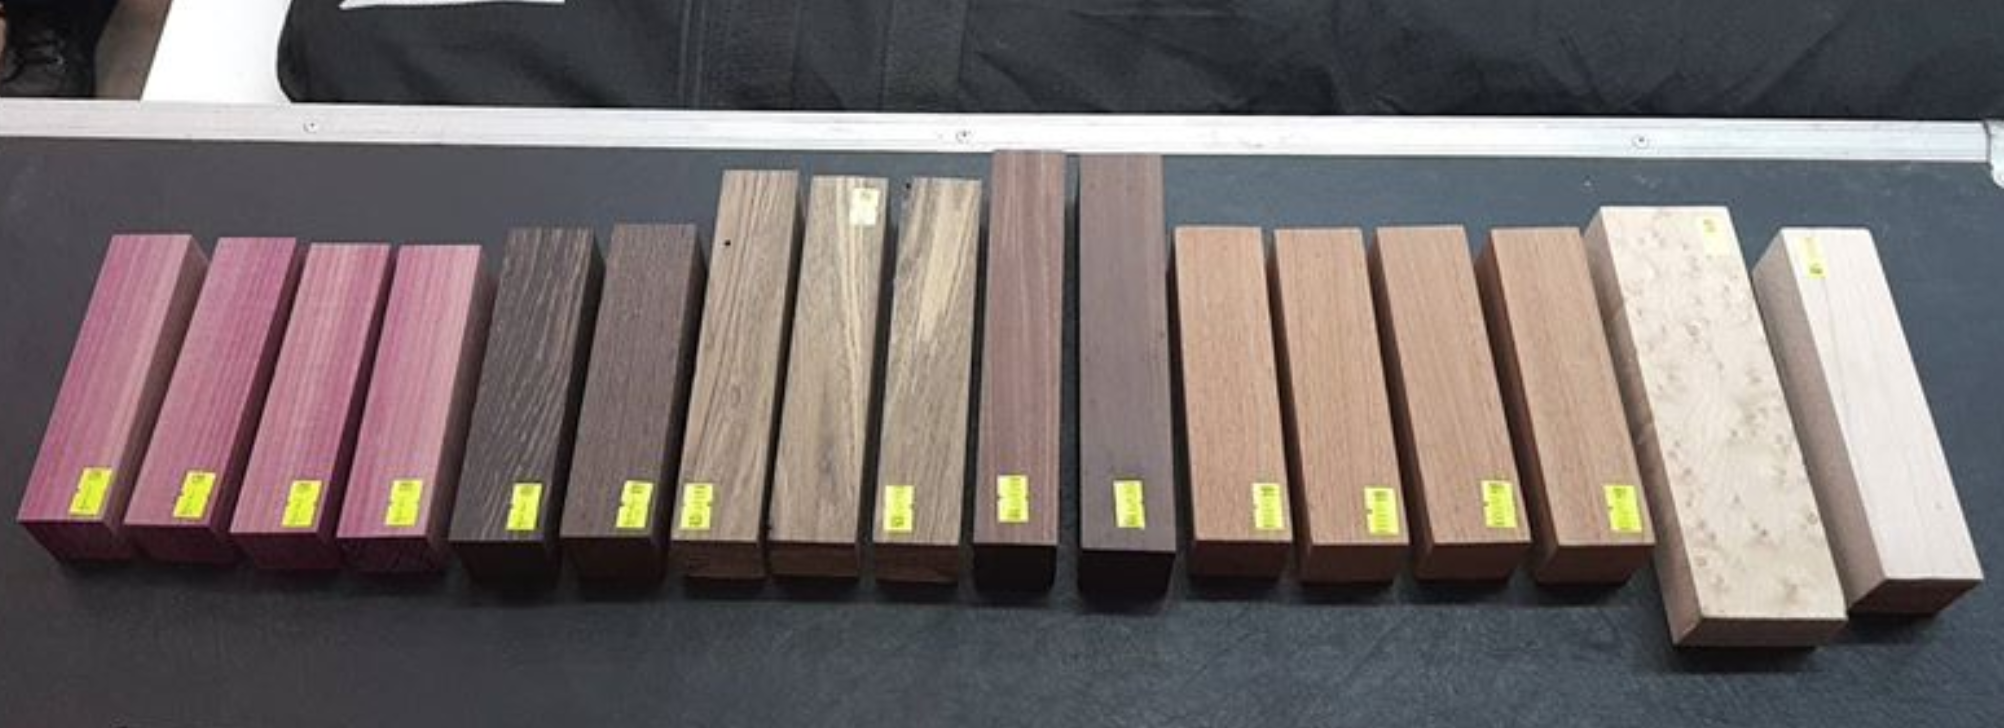 Ejemplos de maderas disponibles